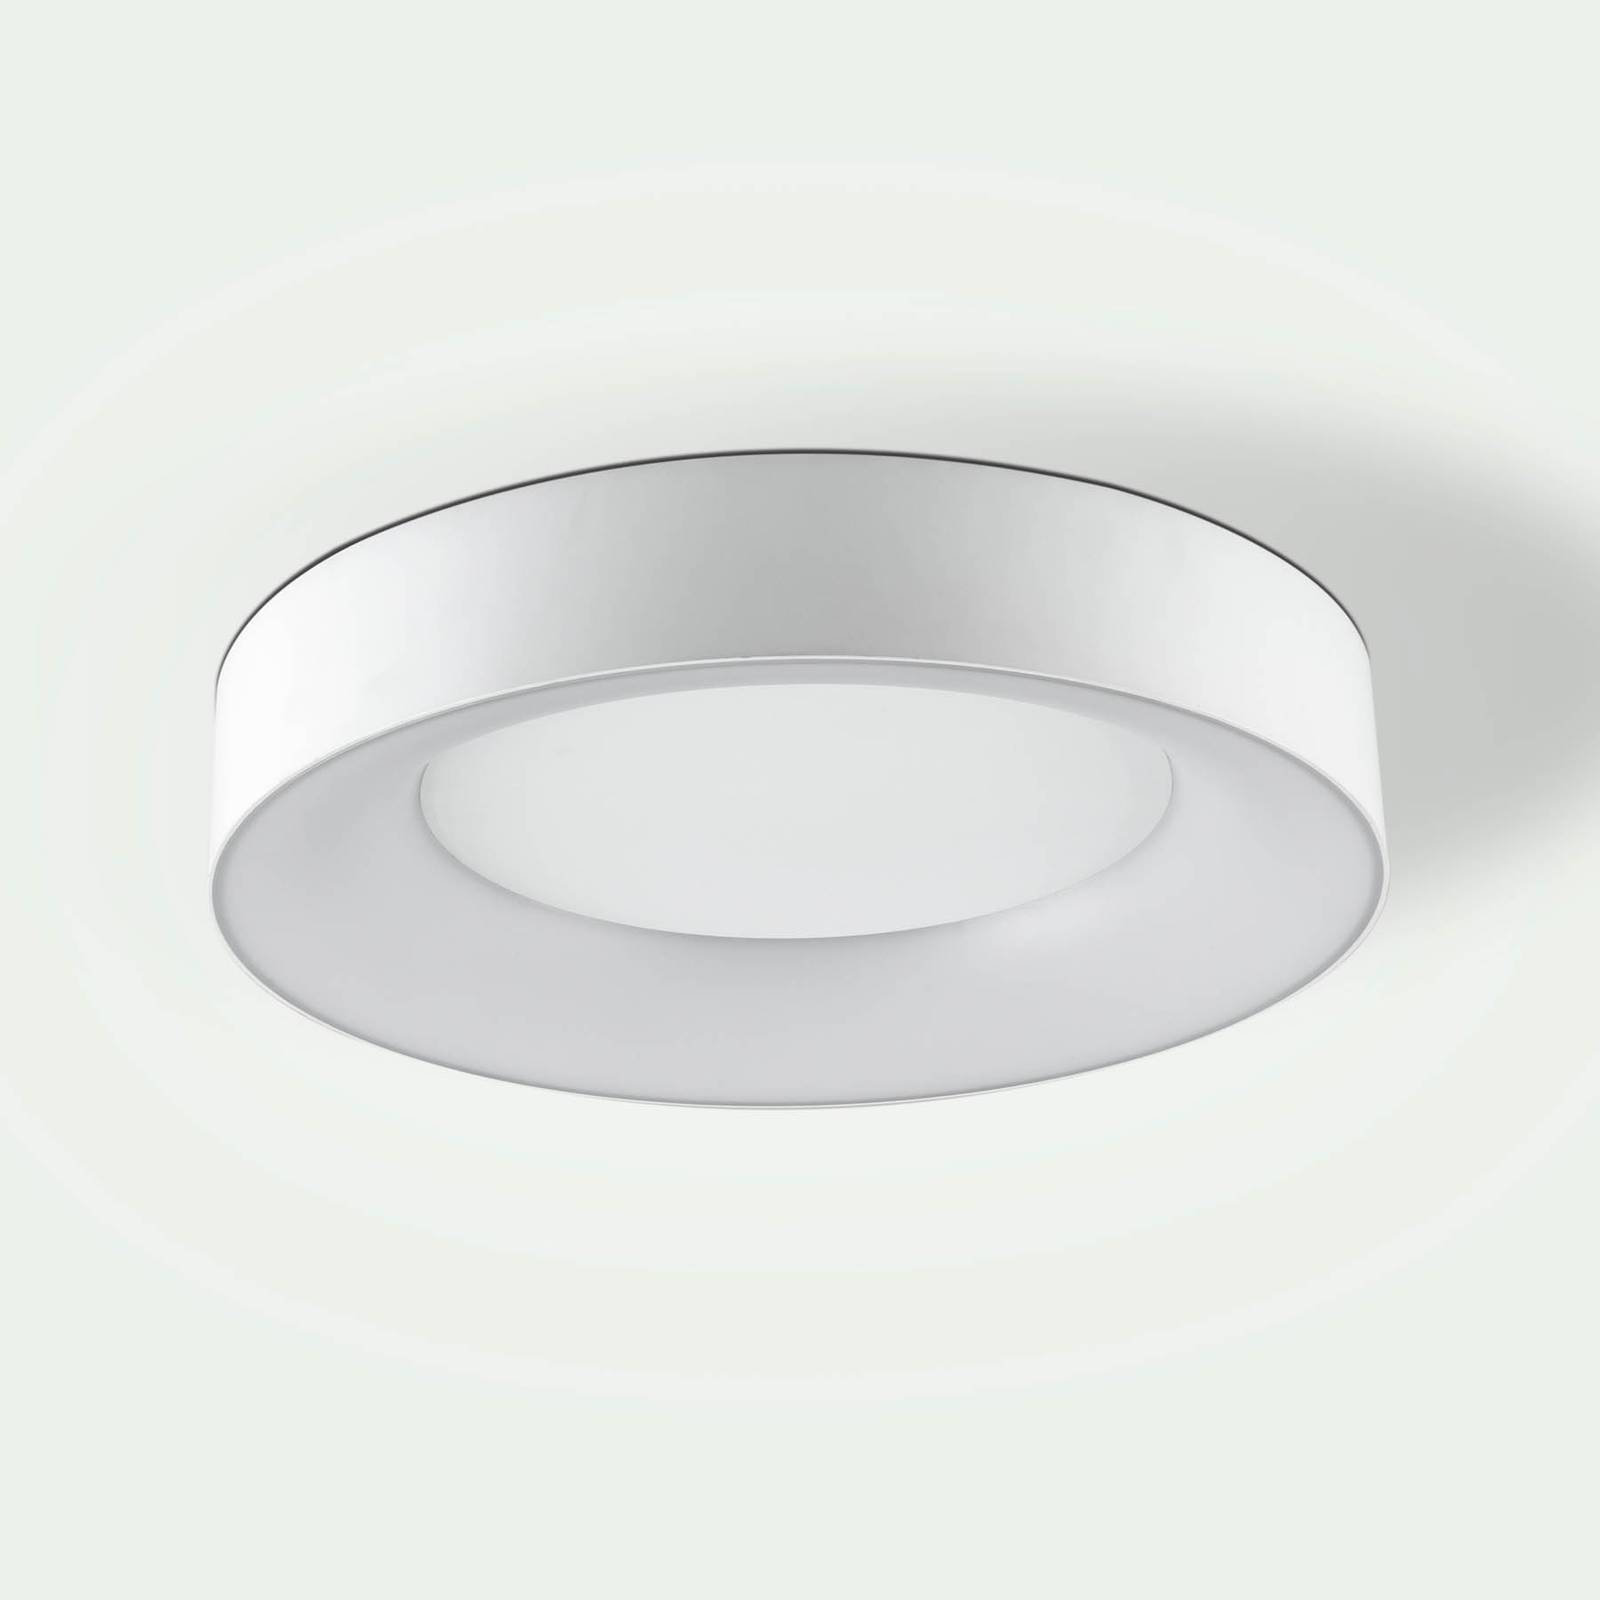 LED plafondlamp Sauro, Ø 40 cm, wit